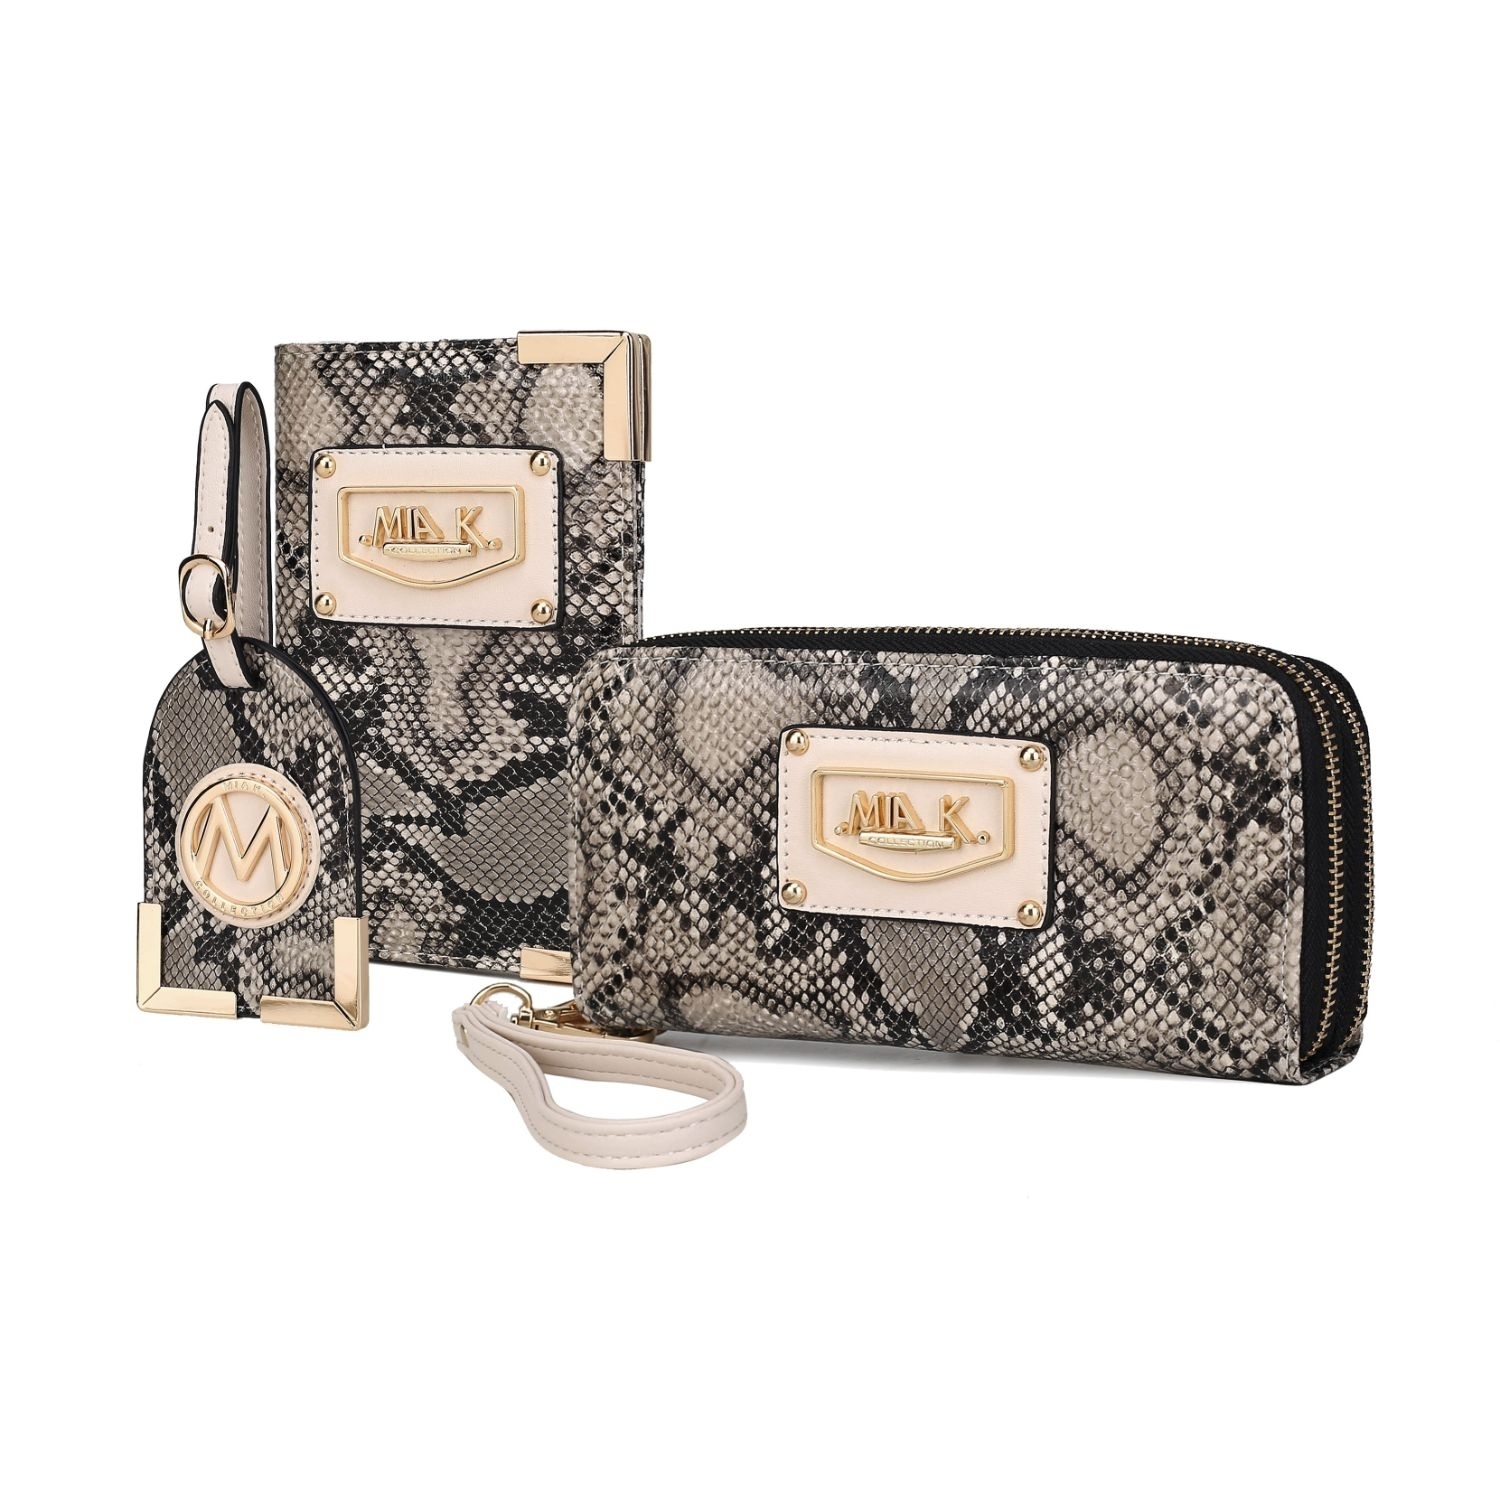 MKF Collection Darla Snake Travel Gift Set Handbag By Mia K 3 Pieces - Coral